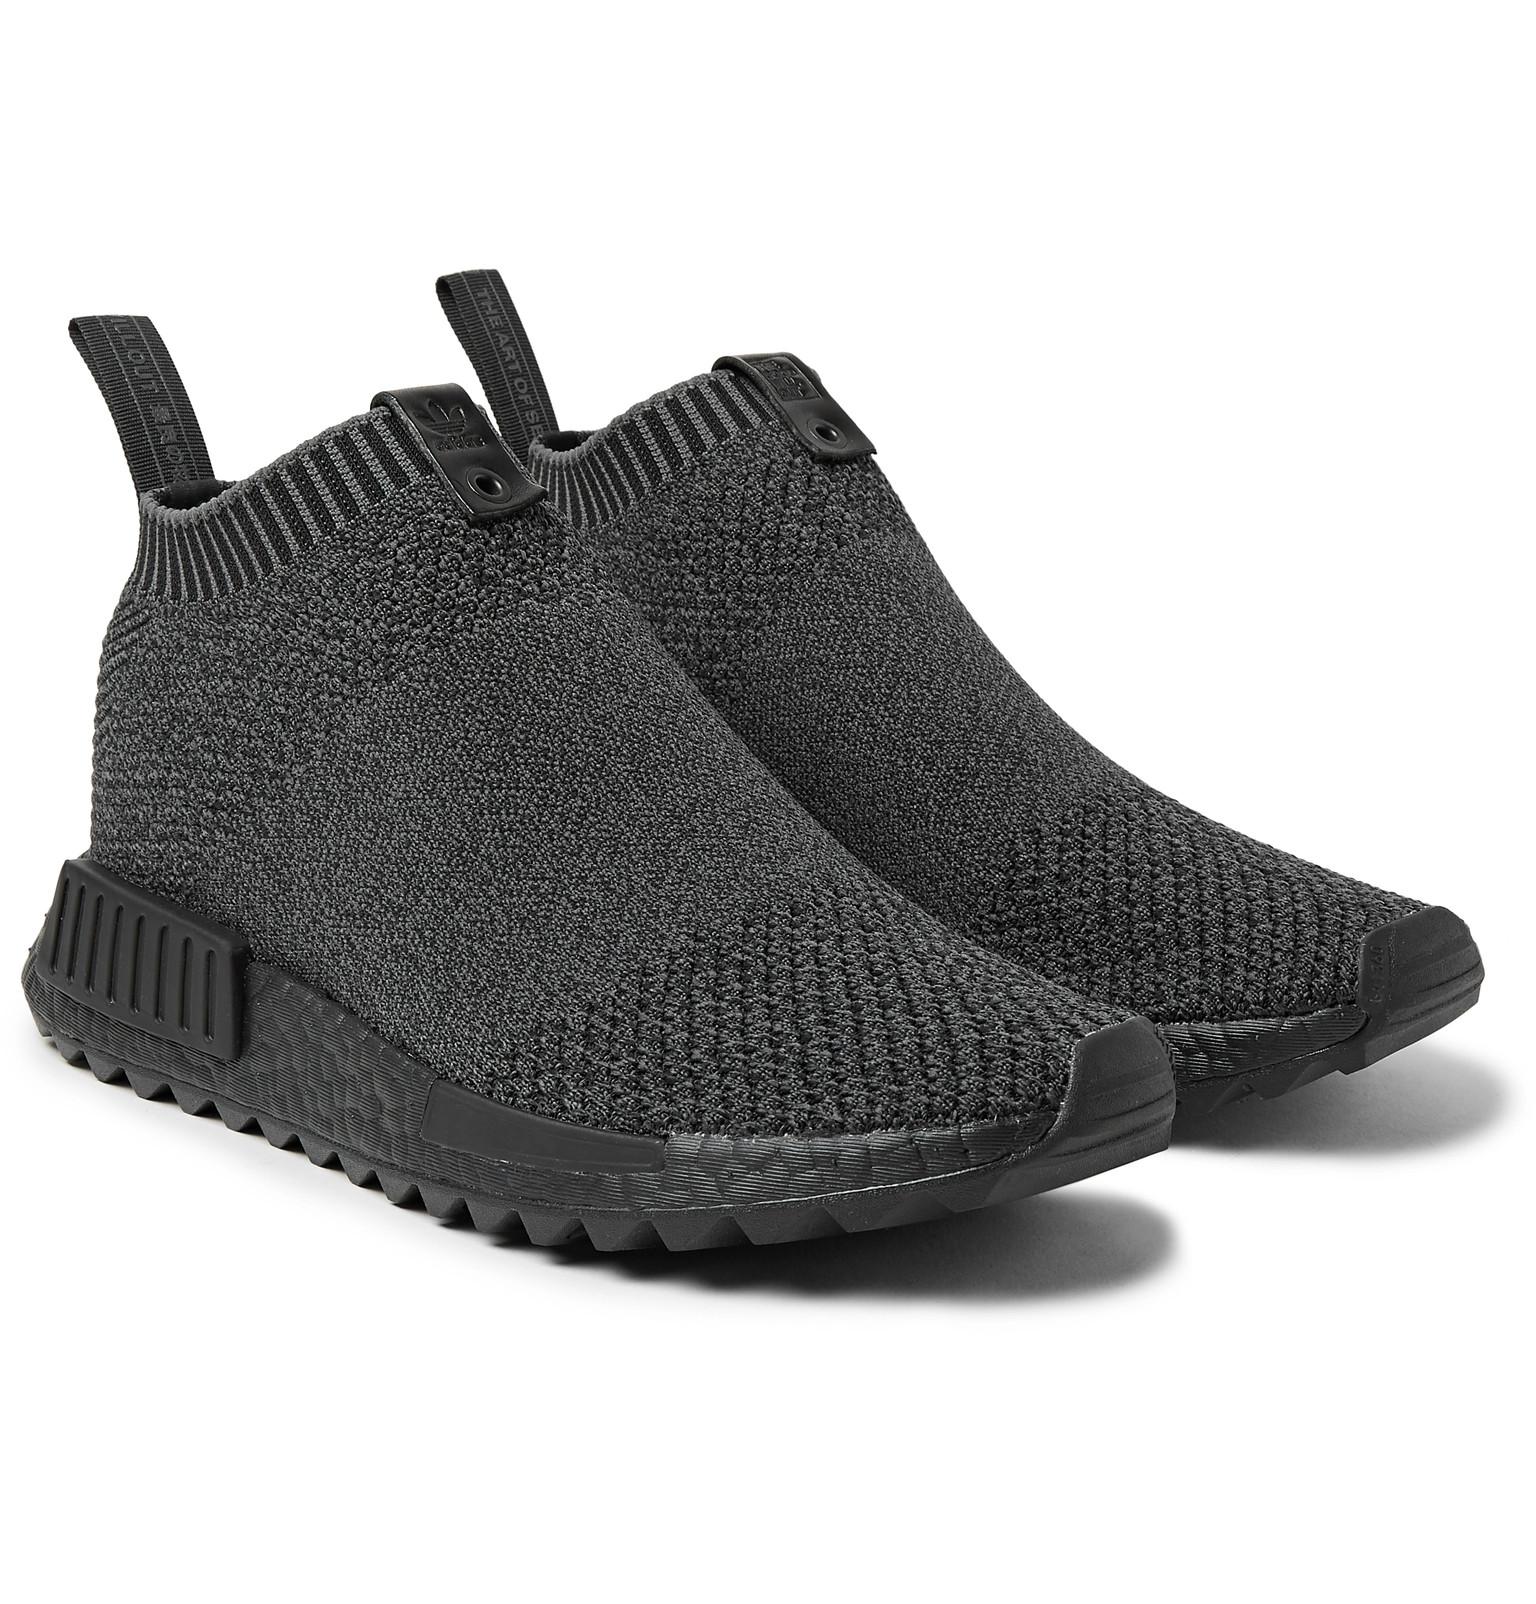 adidas Originals Denim The Good Will Out Nmd Cs1 Primeknit Sneakers Black for Men - Lyst